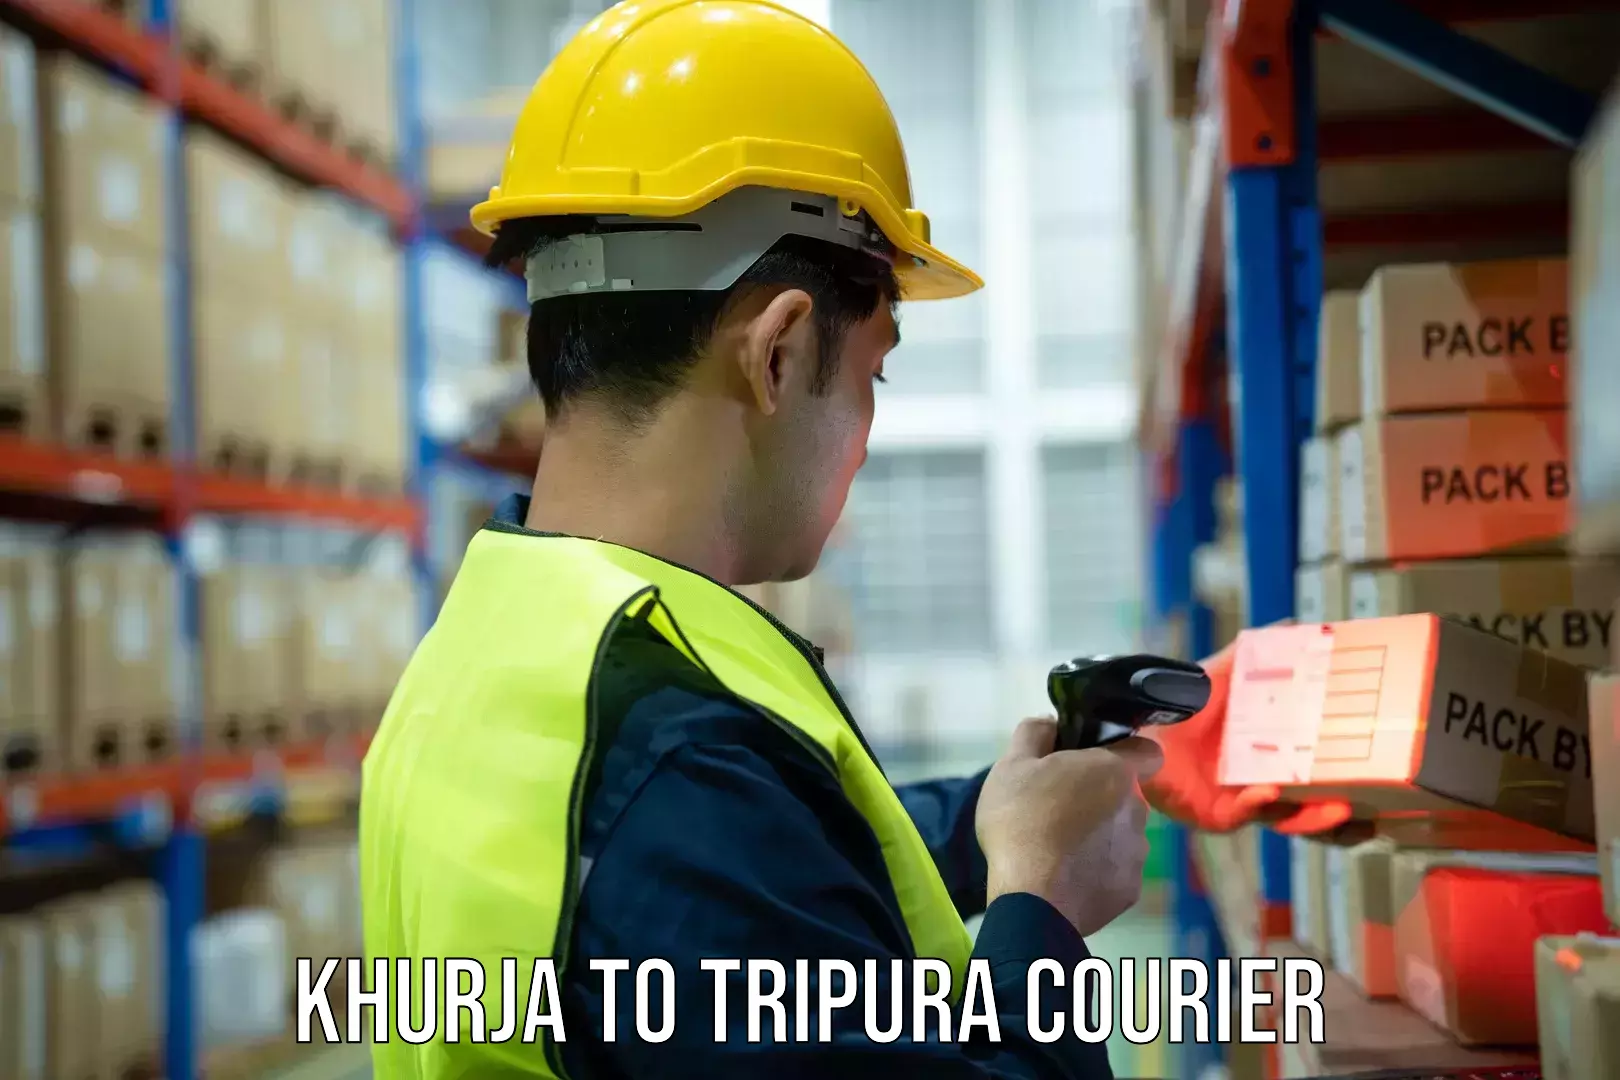 Digital courier platforms Khurja to Tripura